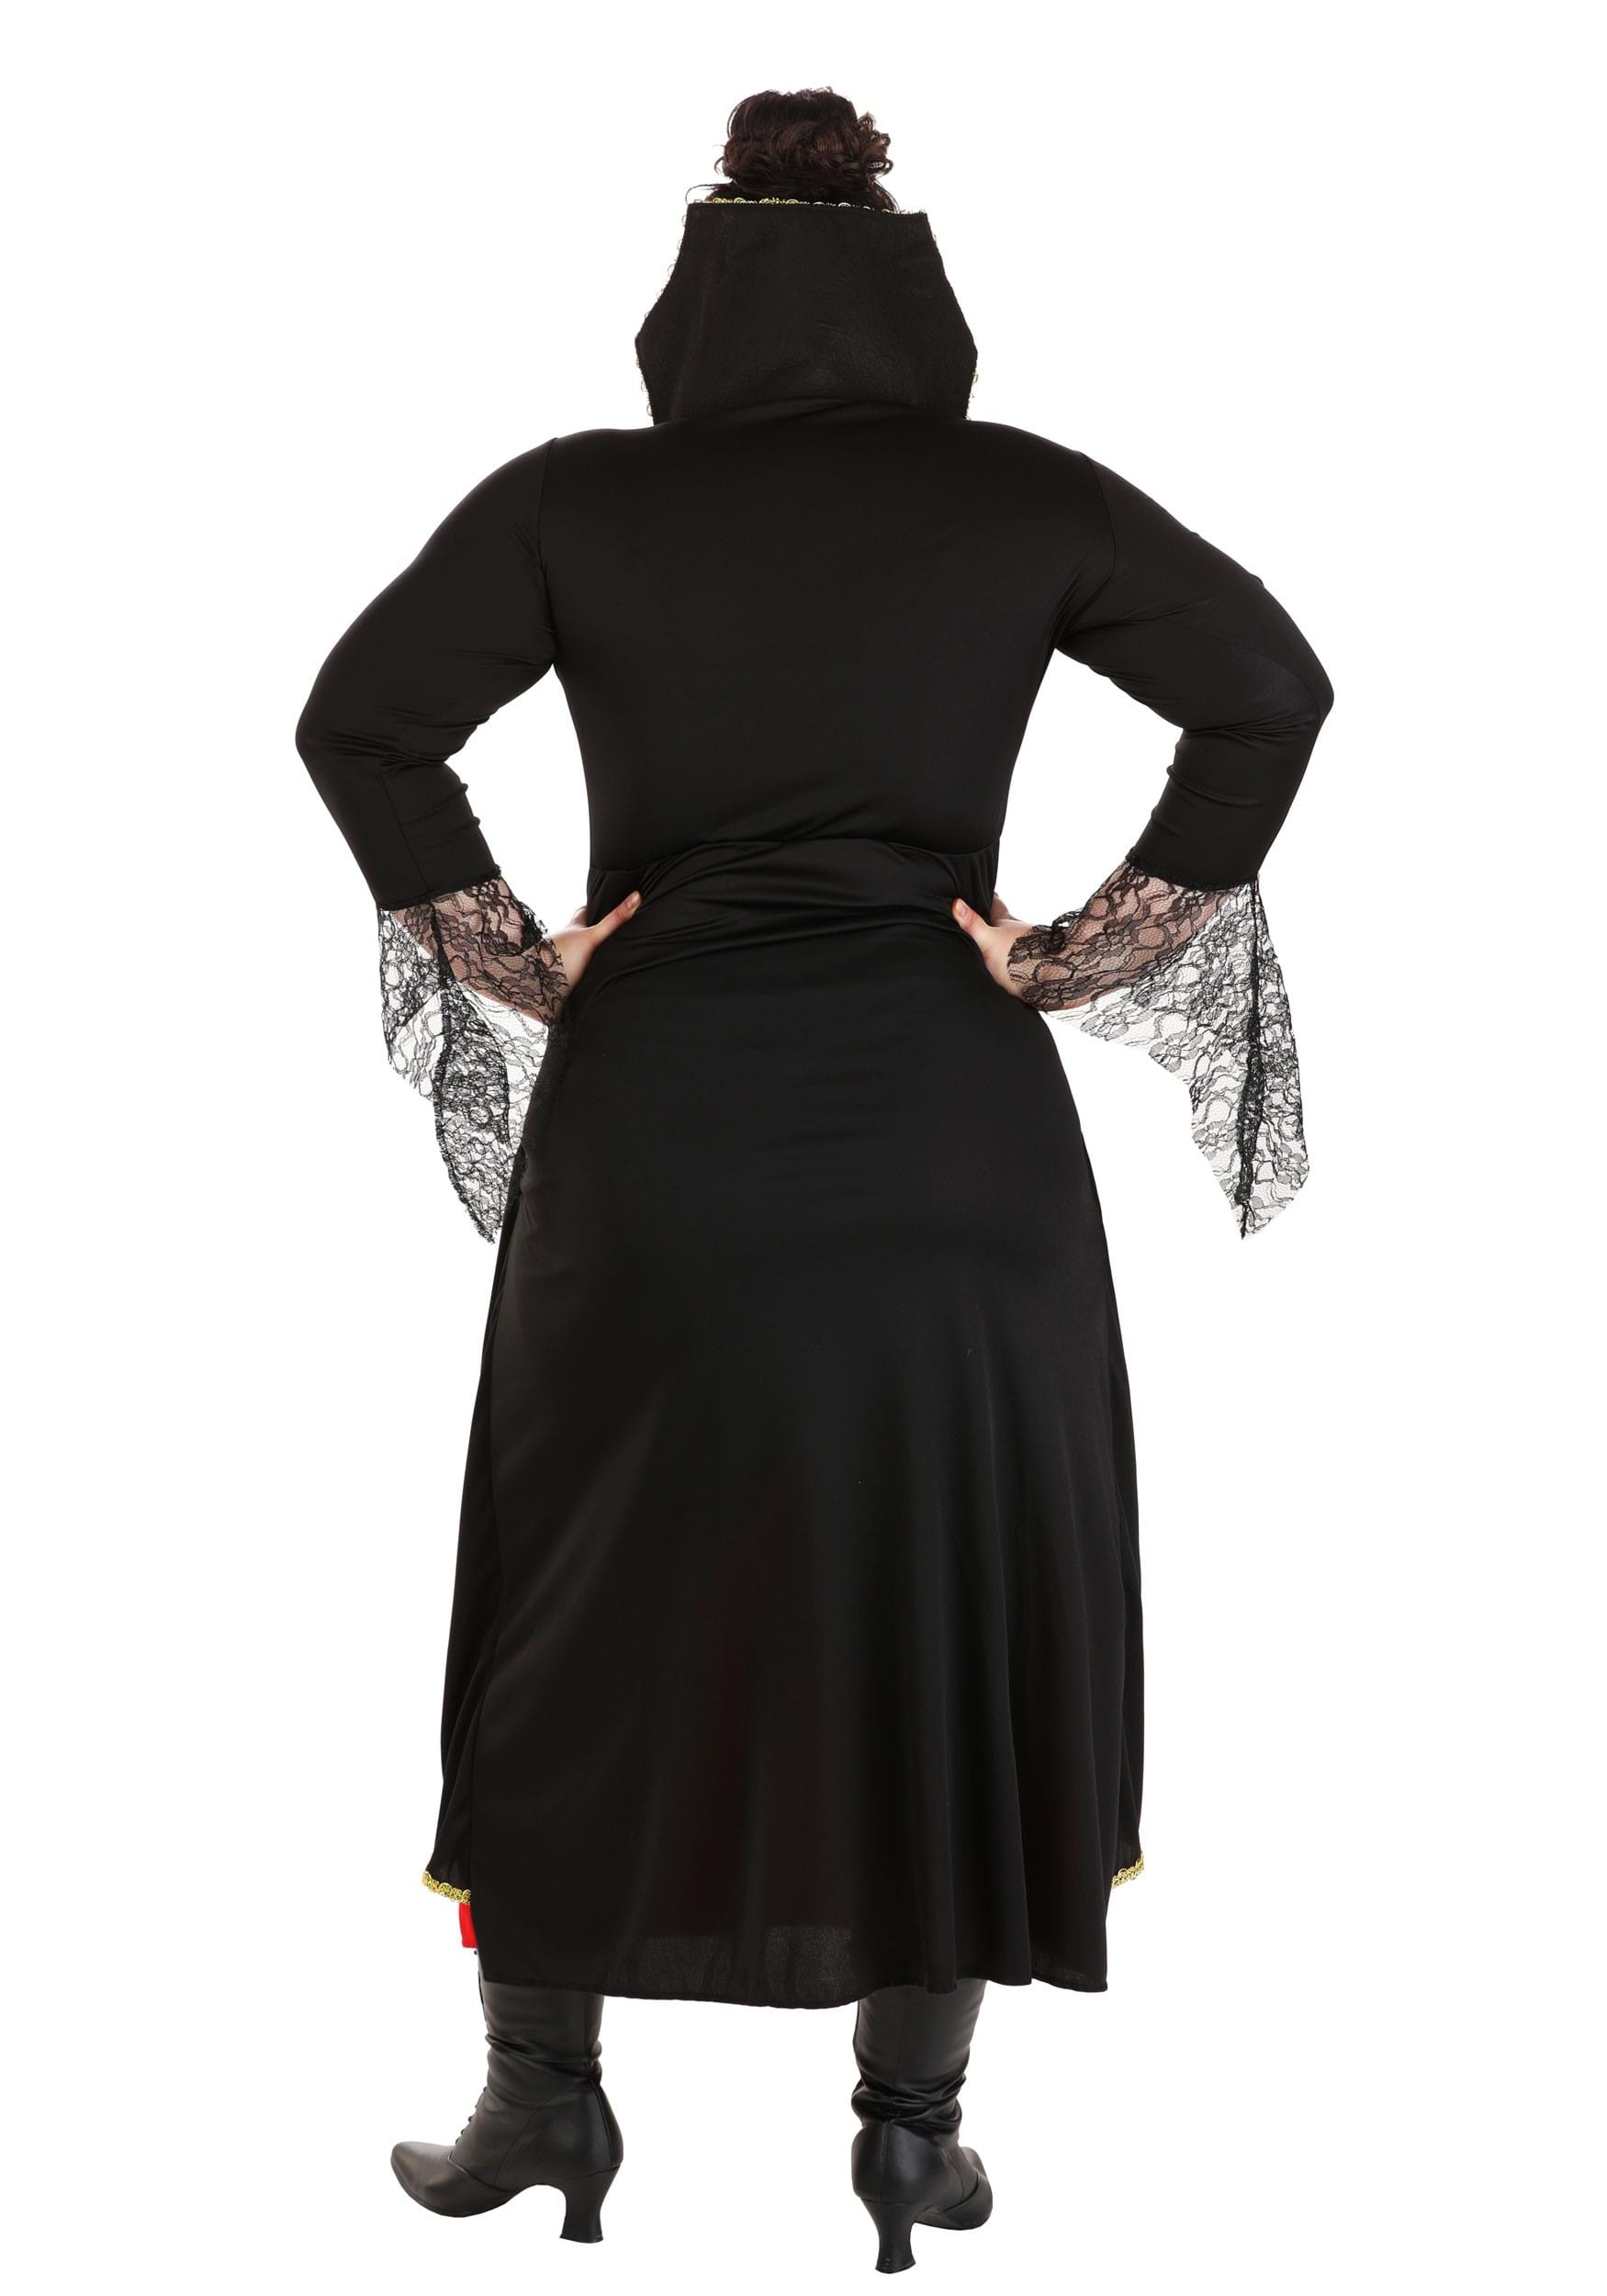 Plus Size Classic Vampire Costume Dress for Women | Vampire Costumes